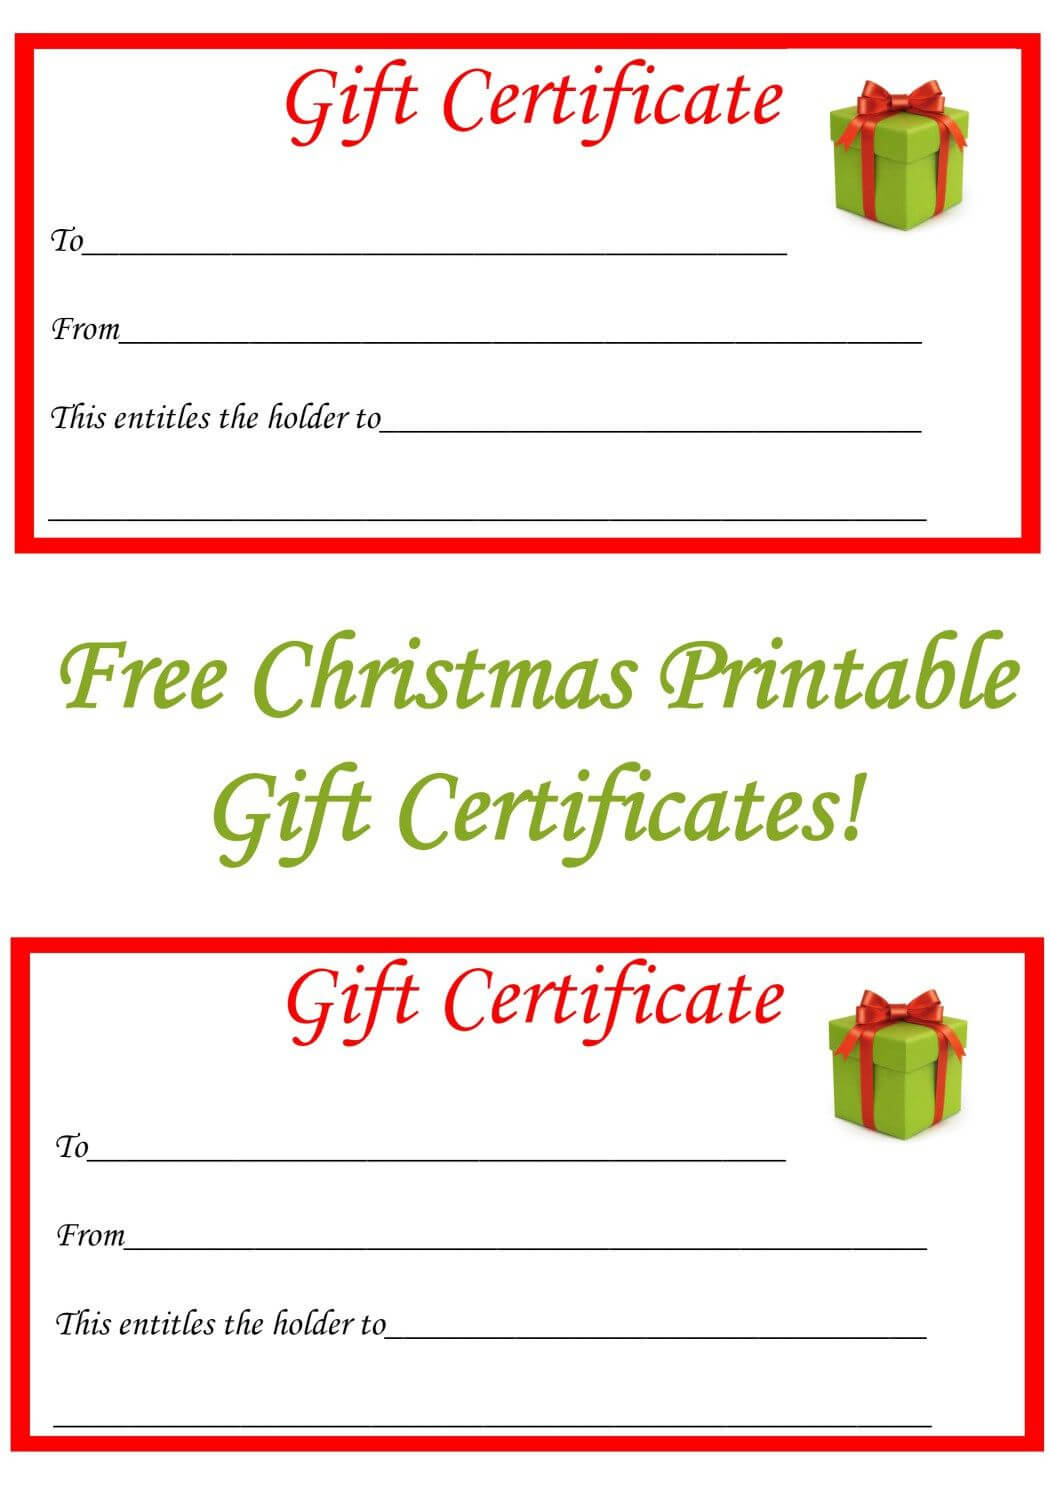 Free Christmas Printable Gift Certificates | Free Gift With Regard To Homemade Christmas Gift Certificates Templates